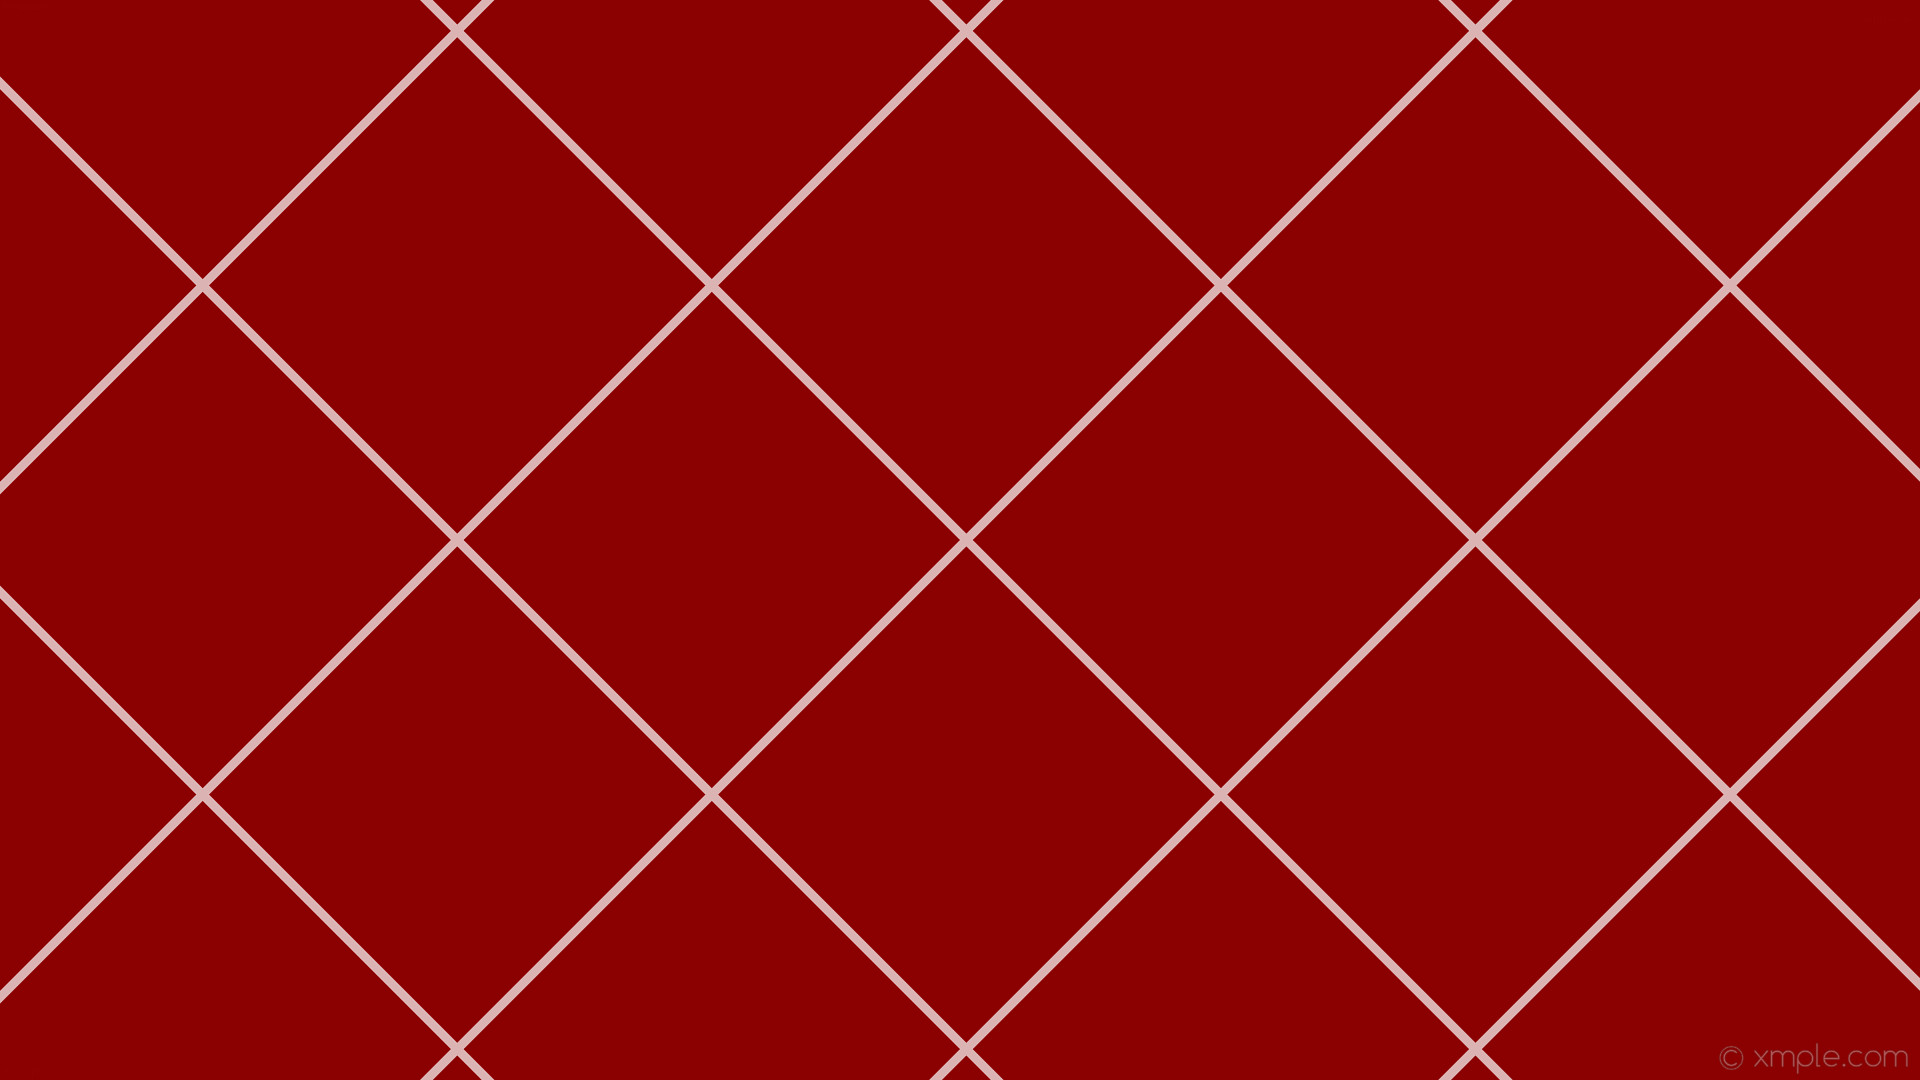 wallpaper graph paper grid red white dark red #8b0000 #ffffff 45Â° 9px 360px